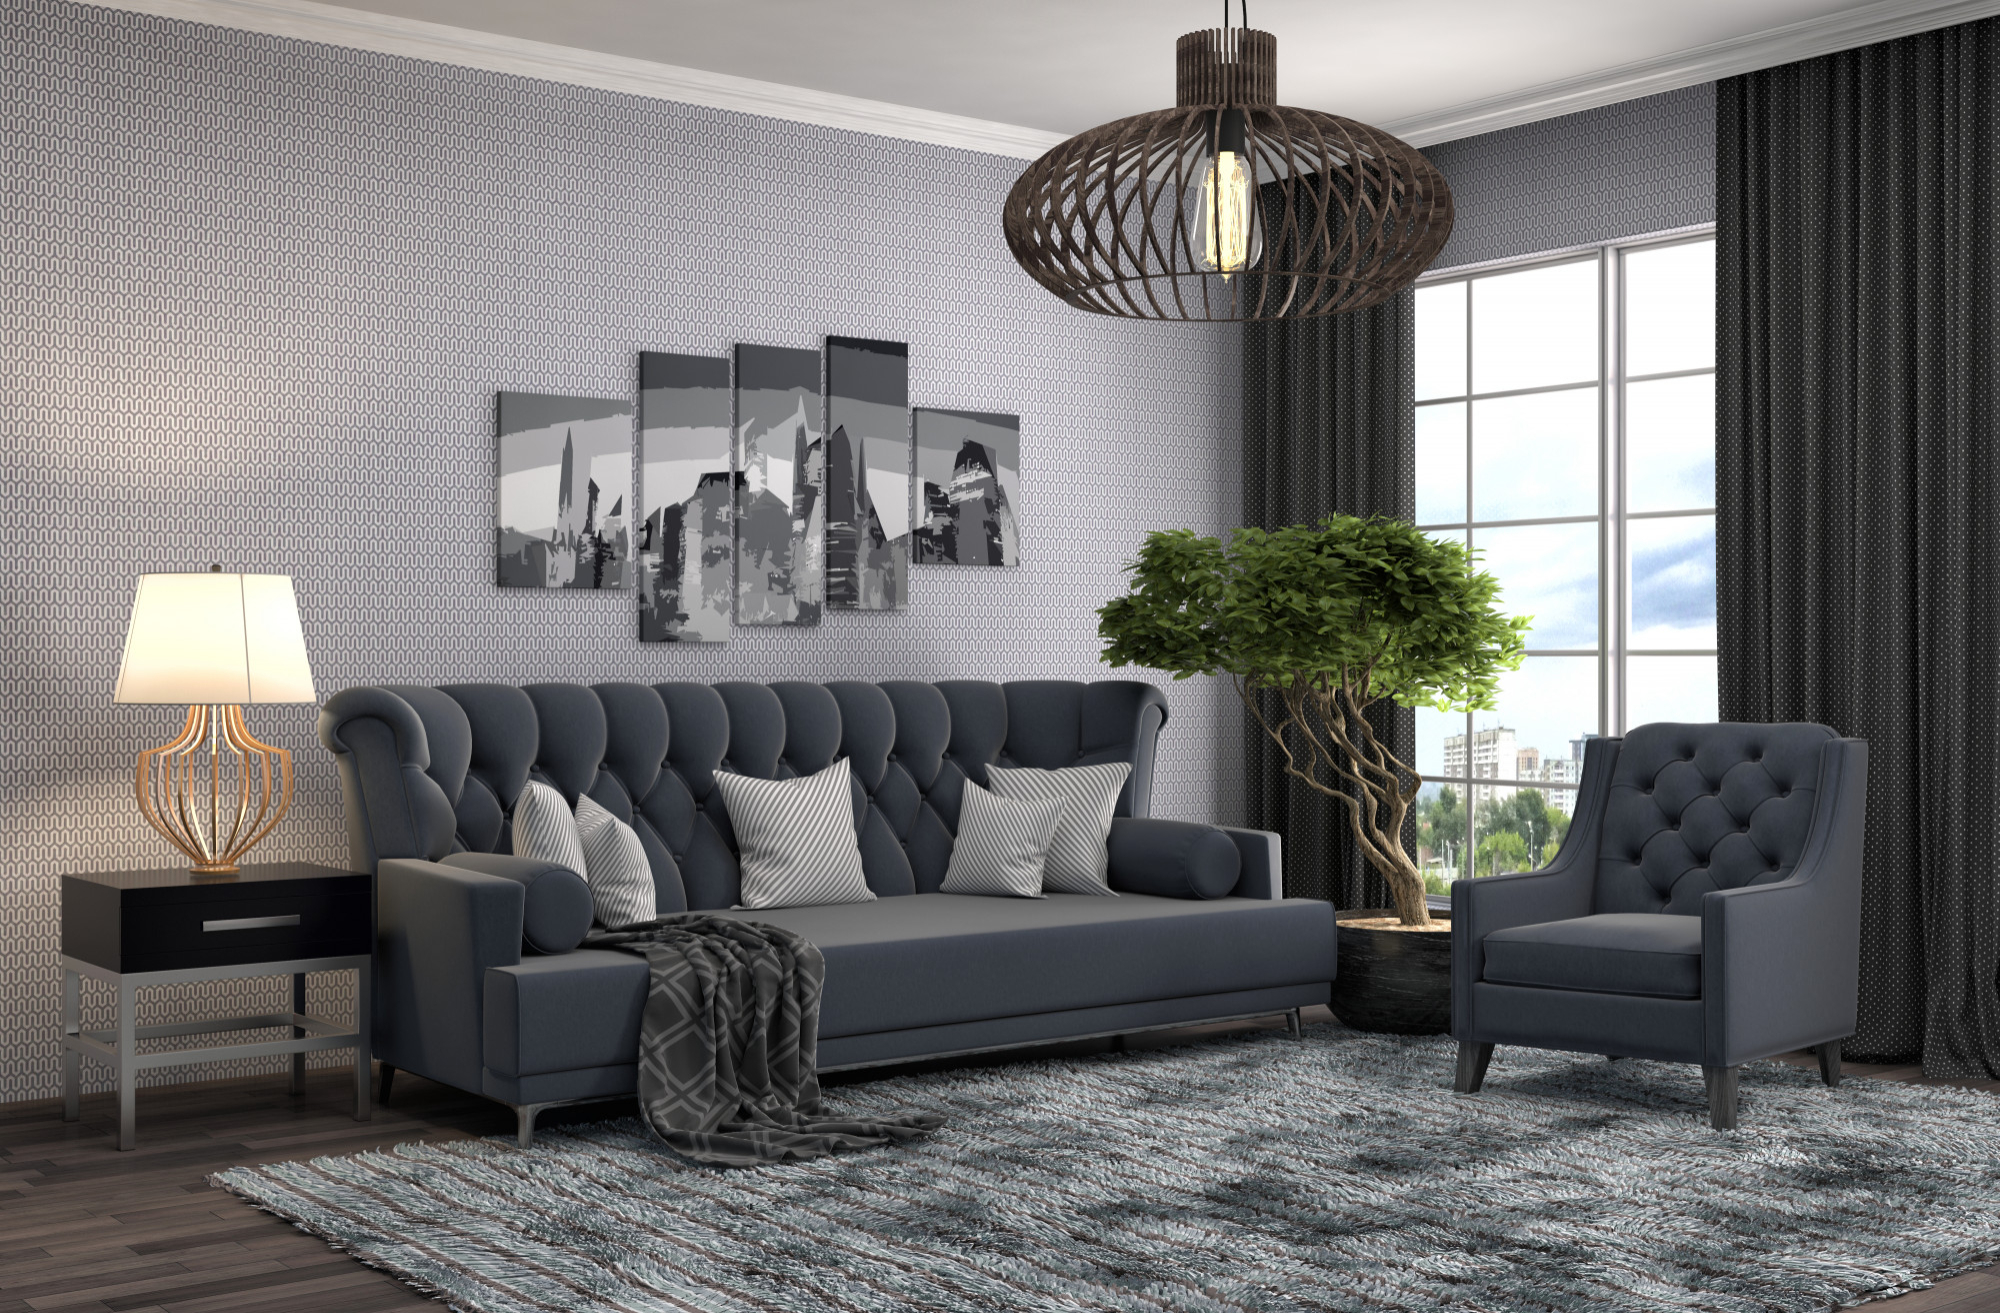 interior-with-sofa-3d-illustration